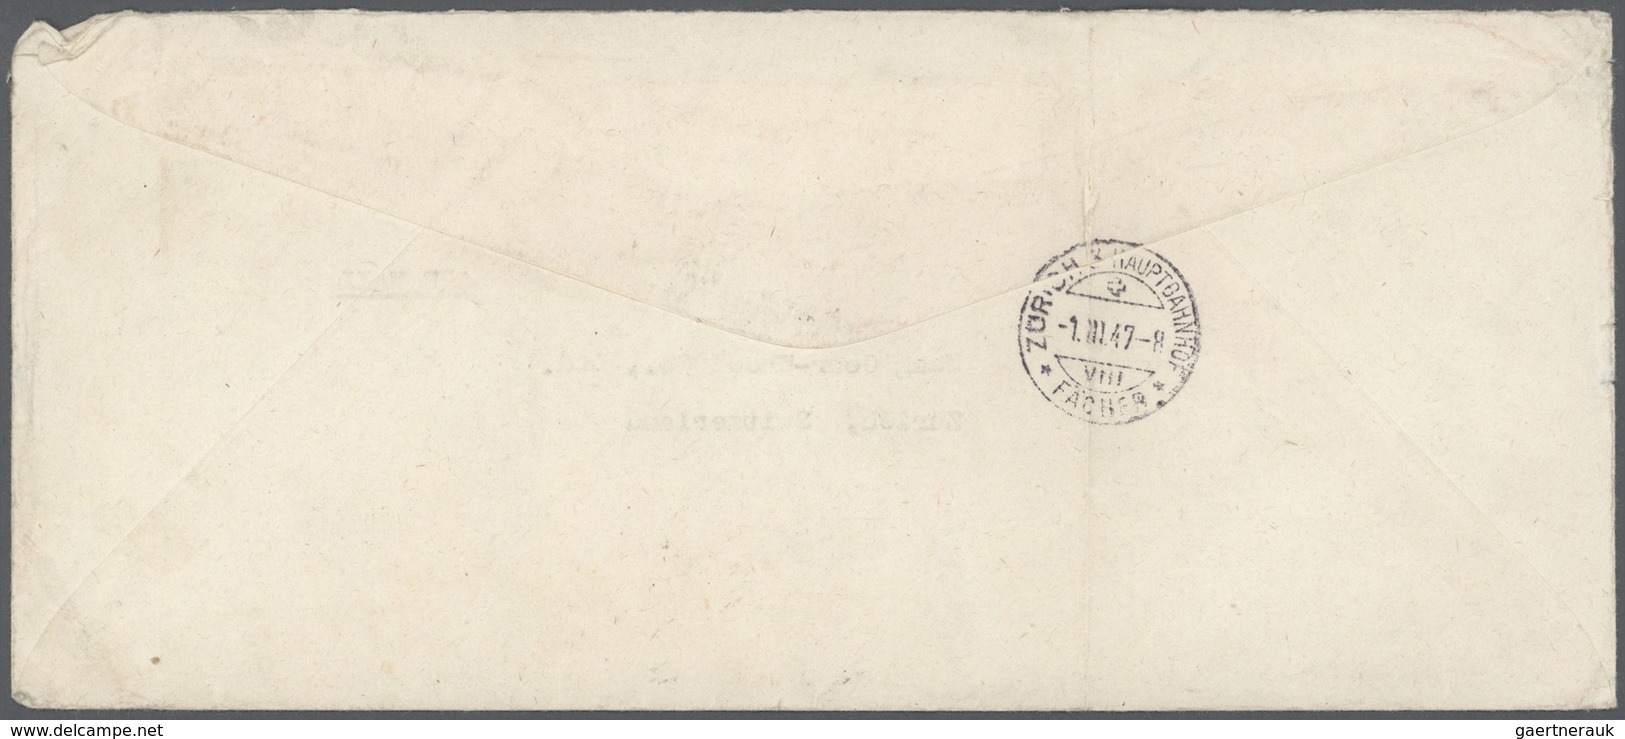 GA Schweiz - Portomarken: 1947 Insuffiently Franked US Postal Stationery Envelope 3c. Uprated 10c And 3 - Taxe